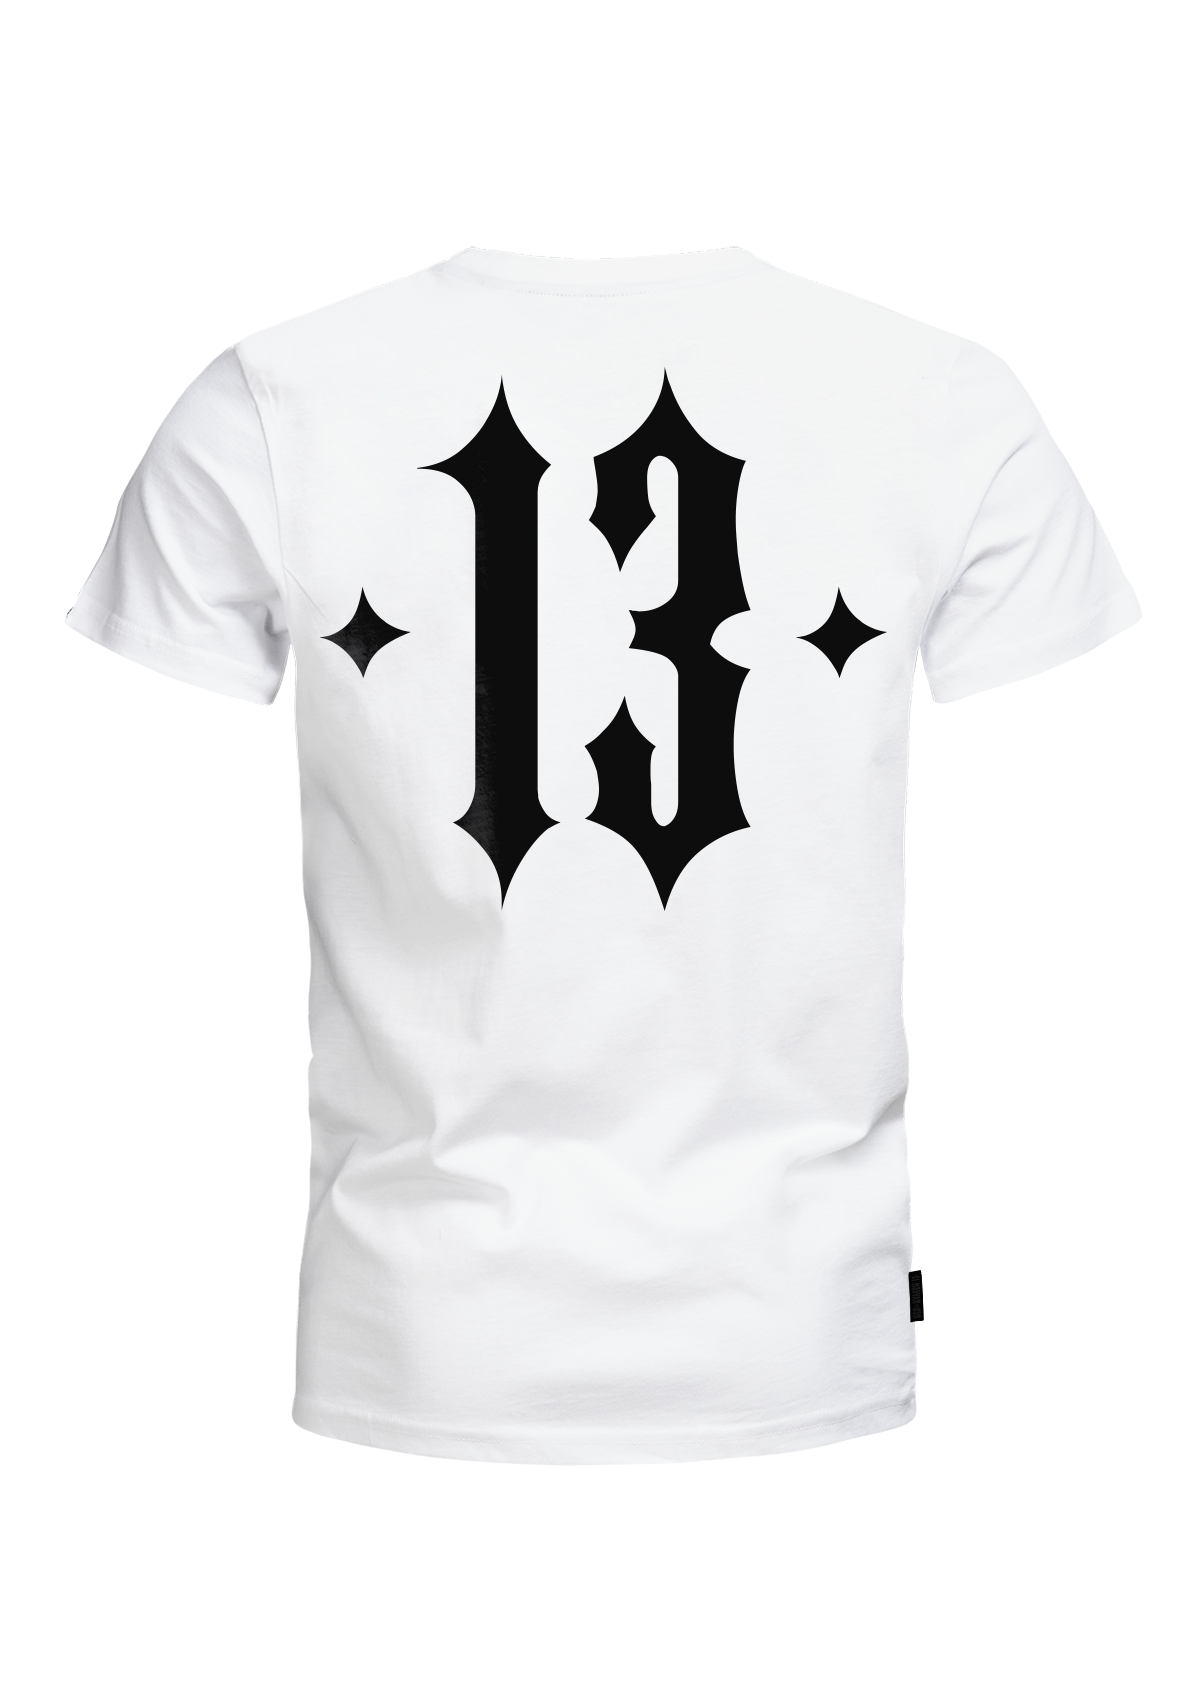 T-Shirt Mayhem XIII W/S